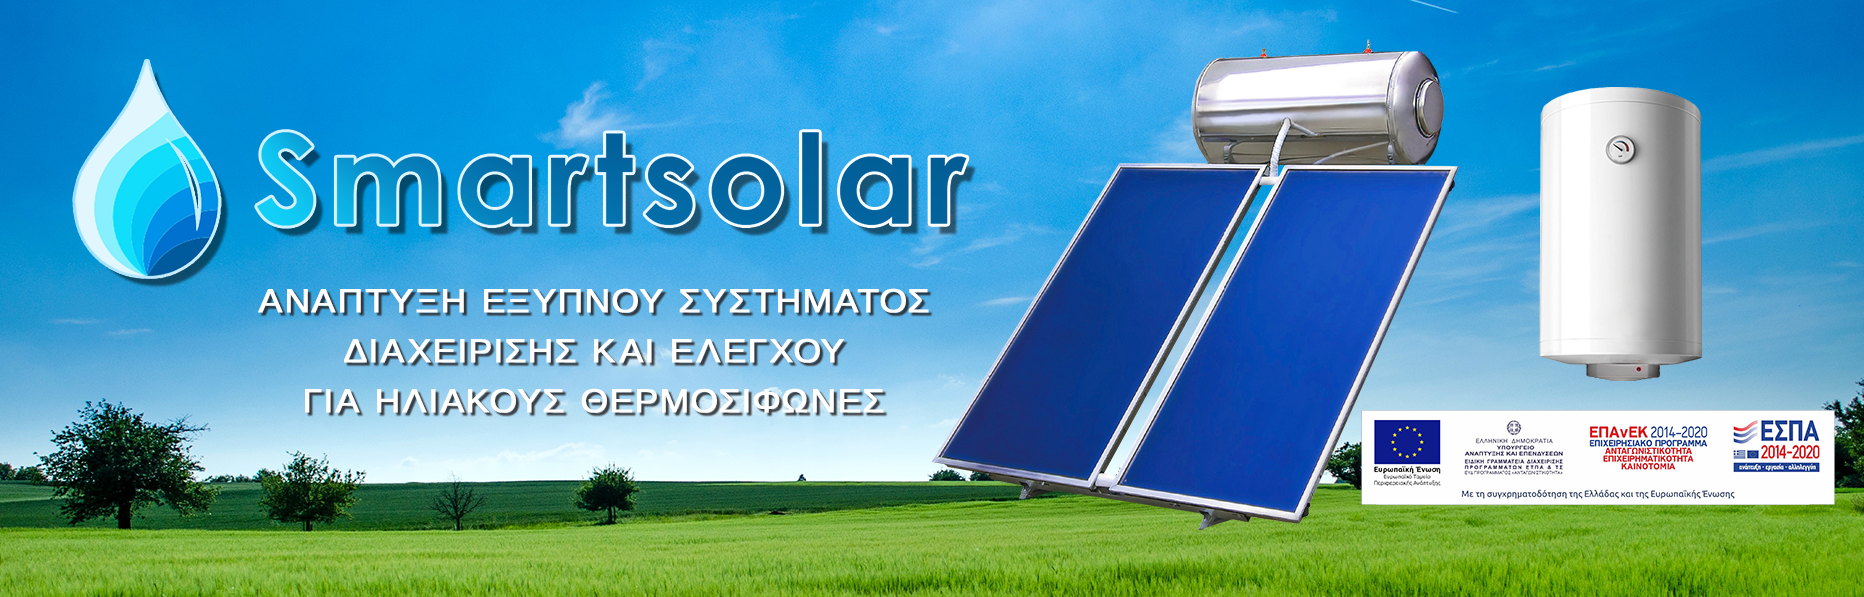 Smart_Solar_Header_11_copy